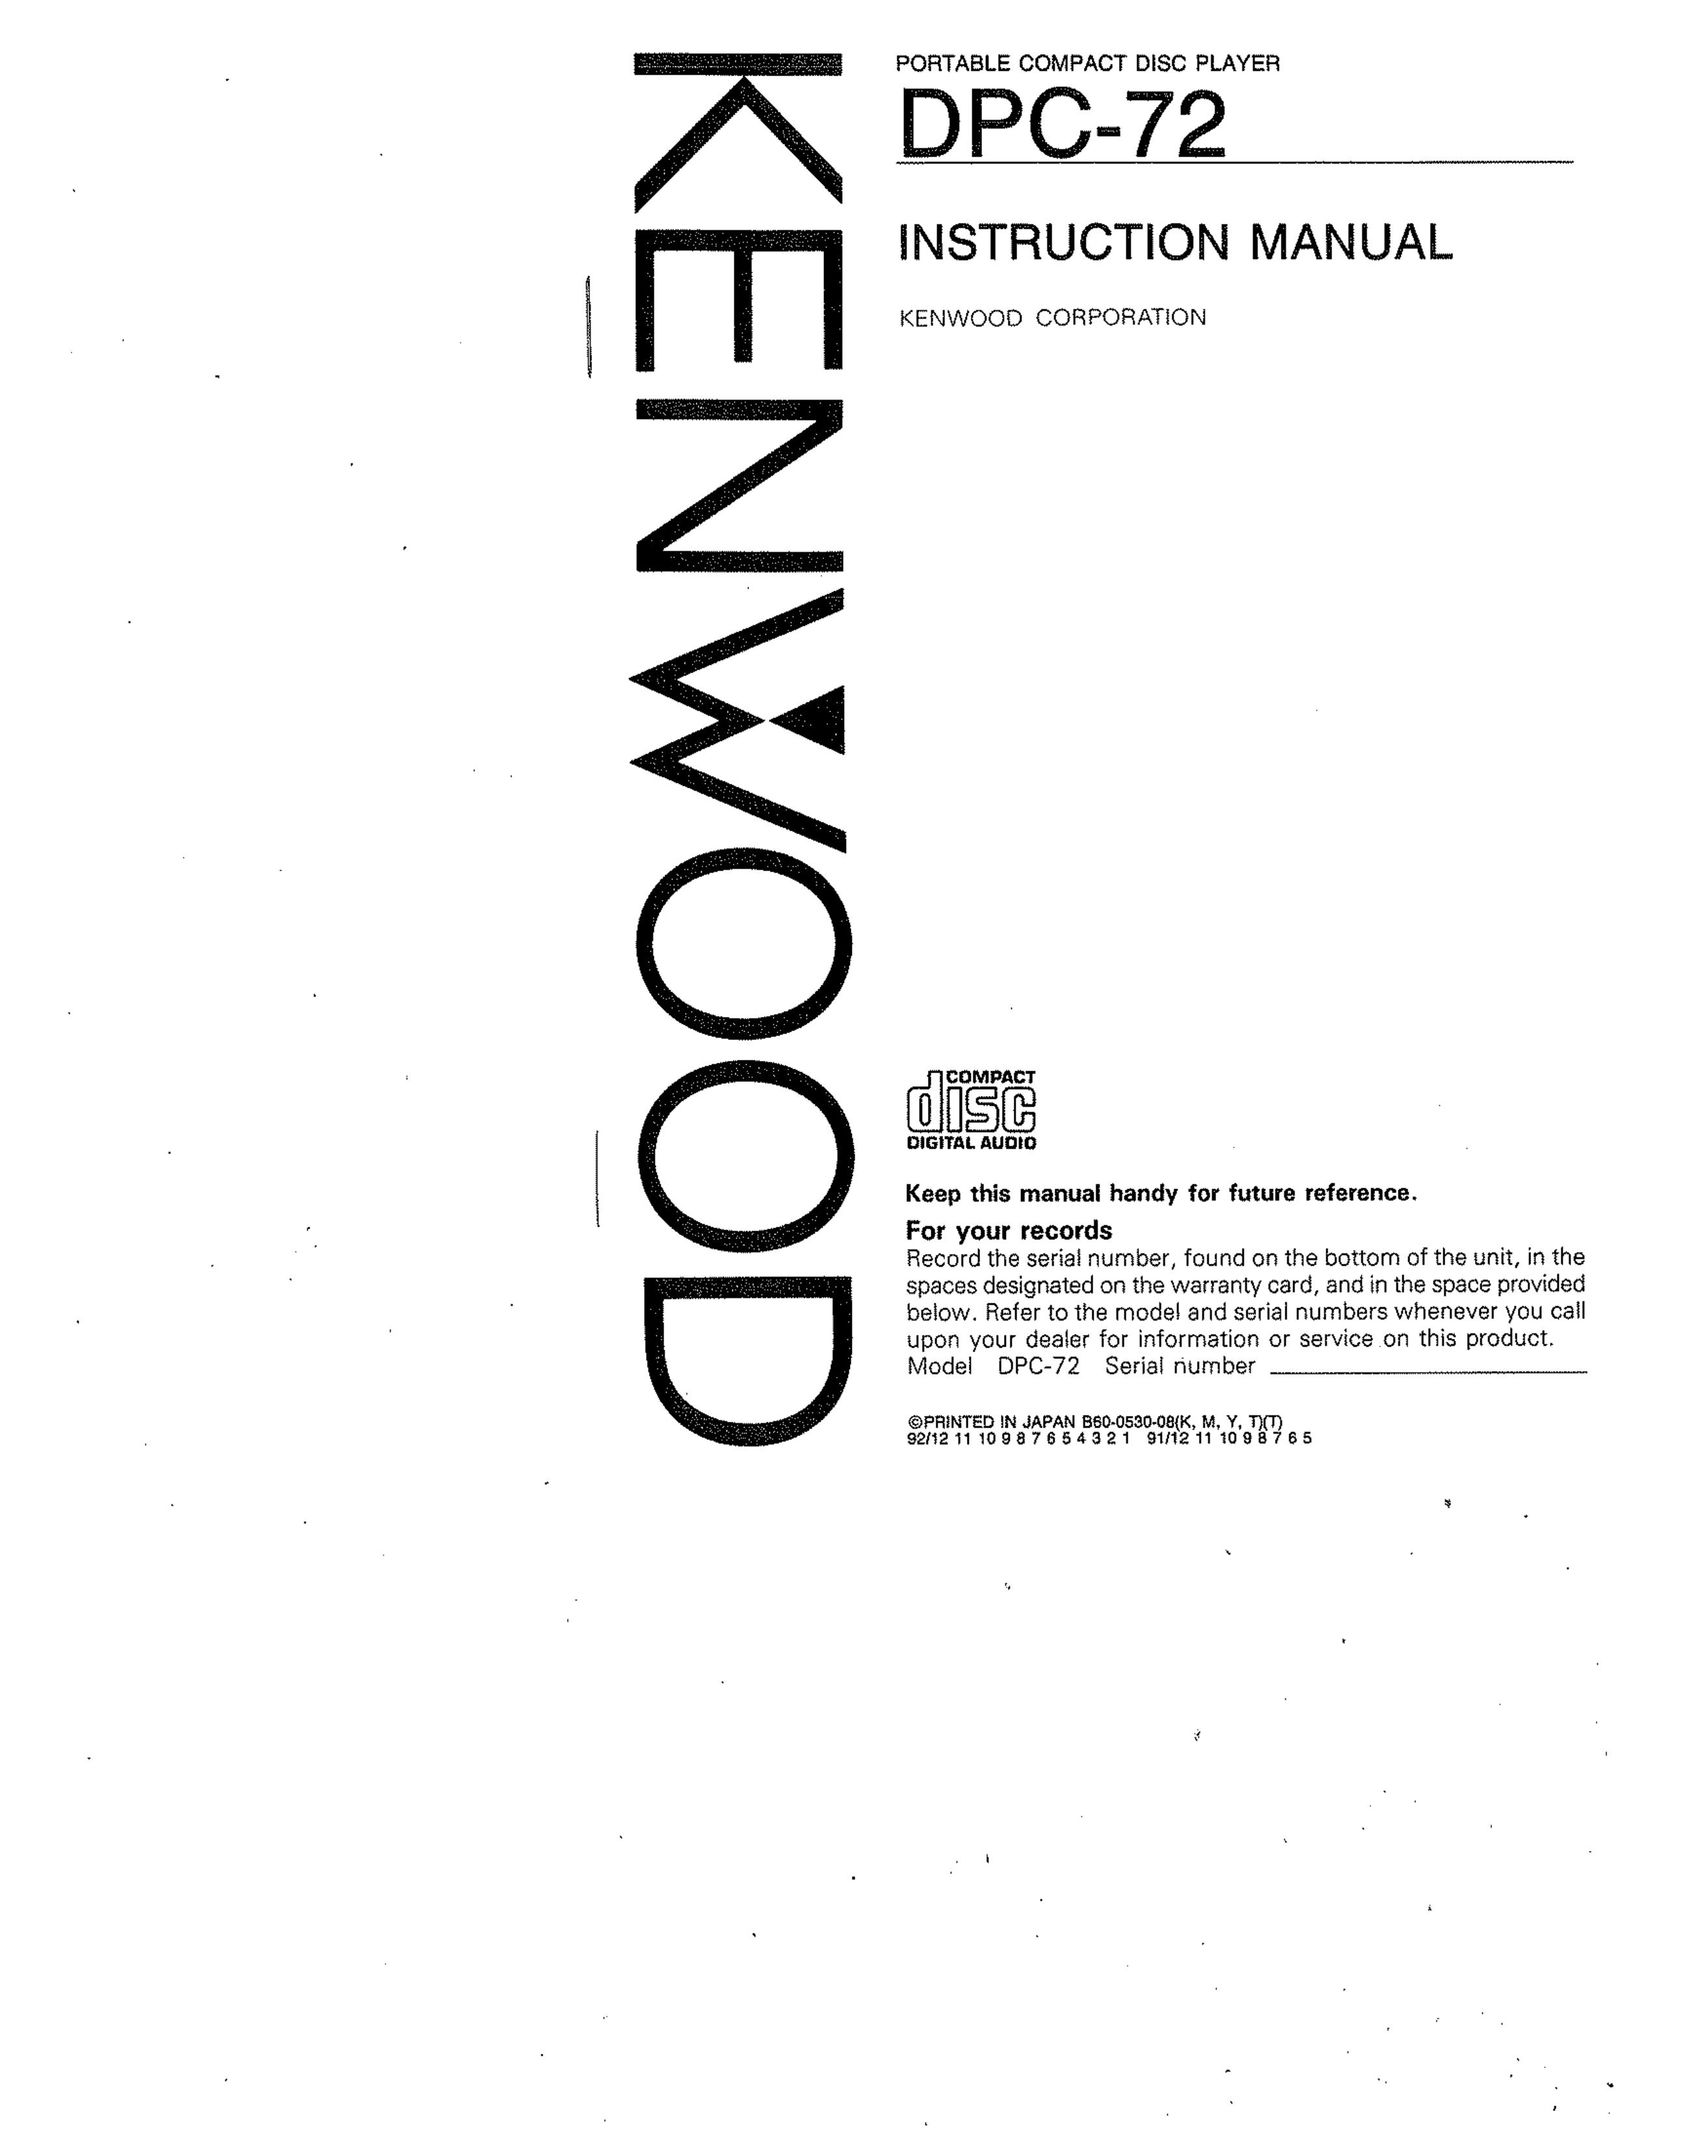 Kenwood DPC-72 CD Player User Manual